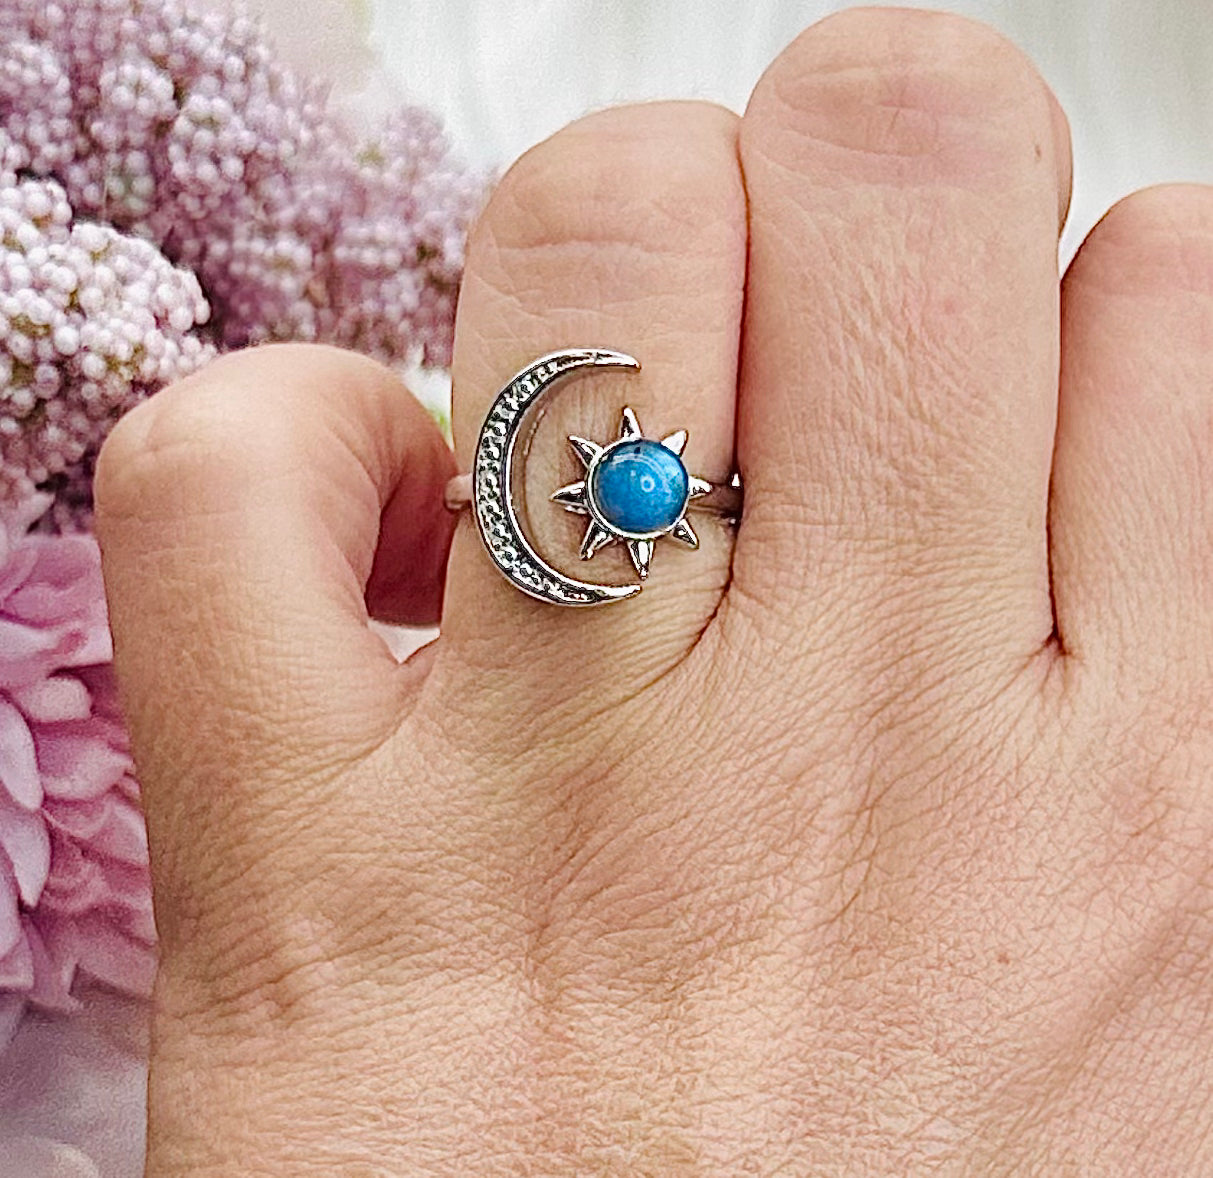 Stunning Blue Flash Labradorite Moon & Star Adjustable Ring In Gift Bag